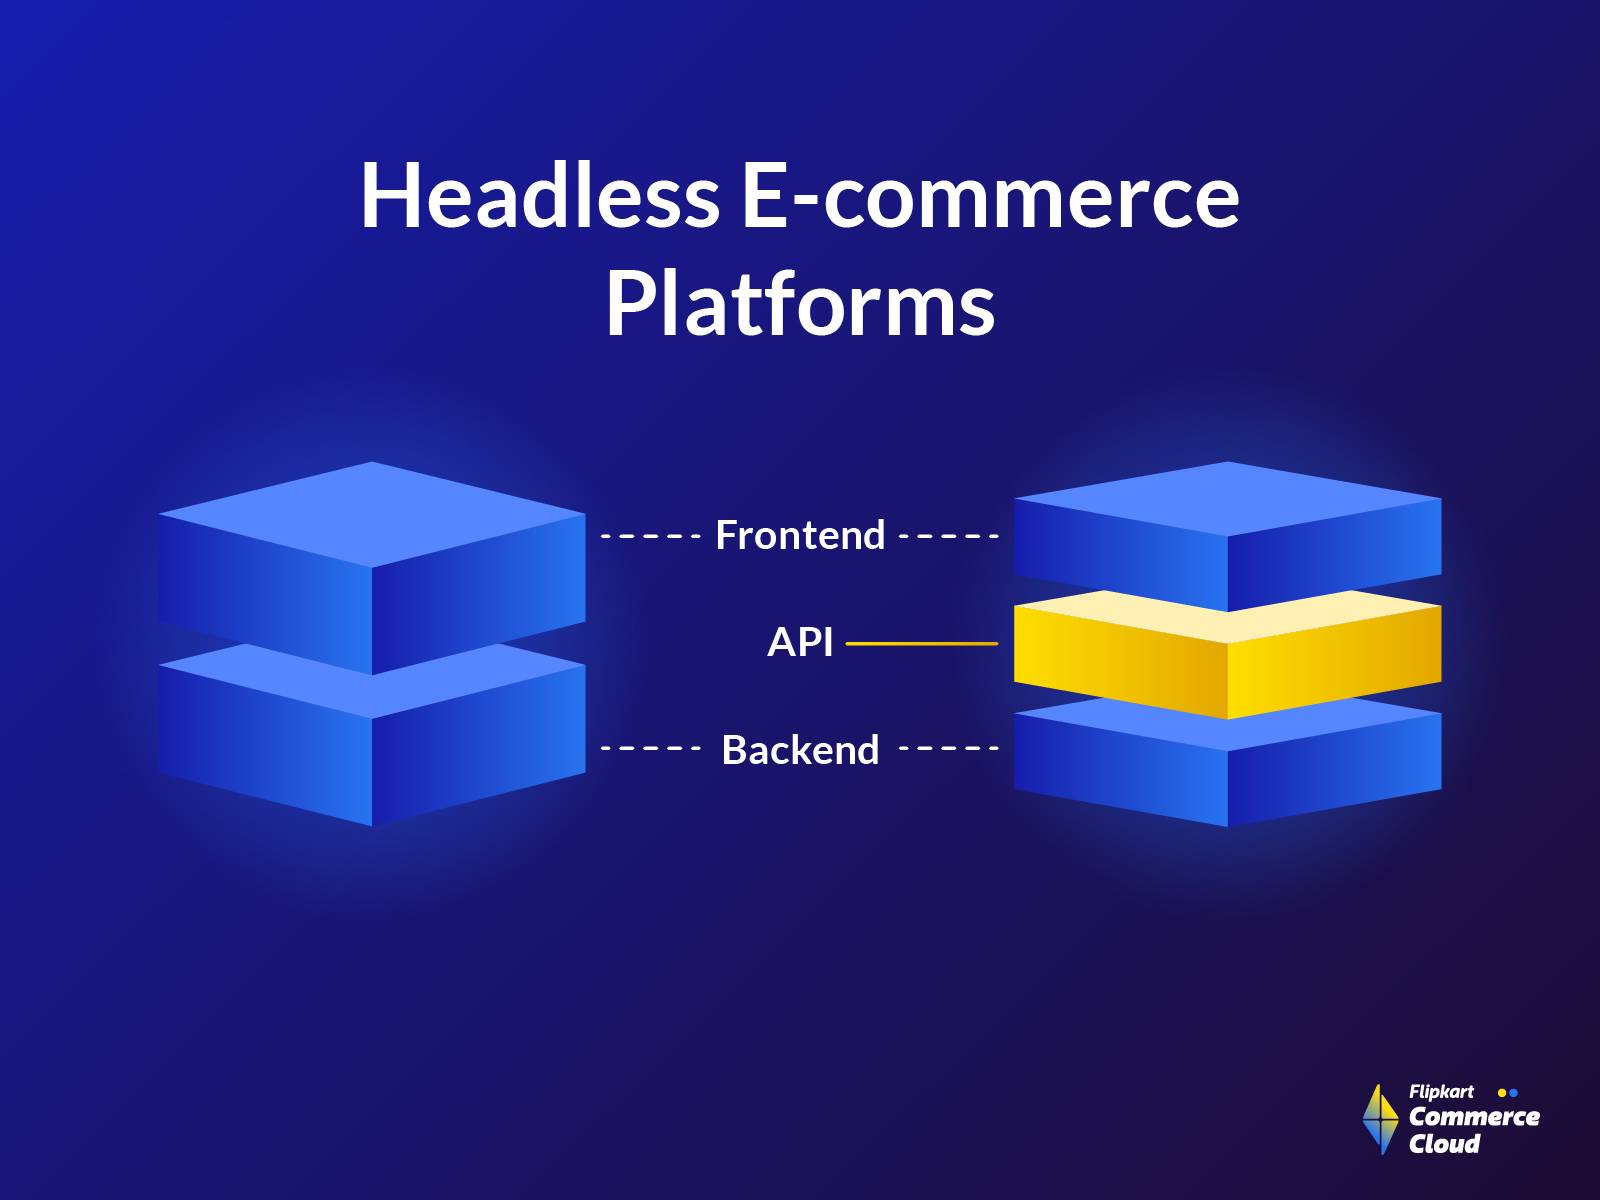 What is a headless e-commerce platform